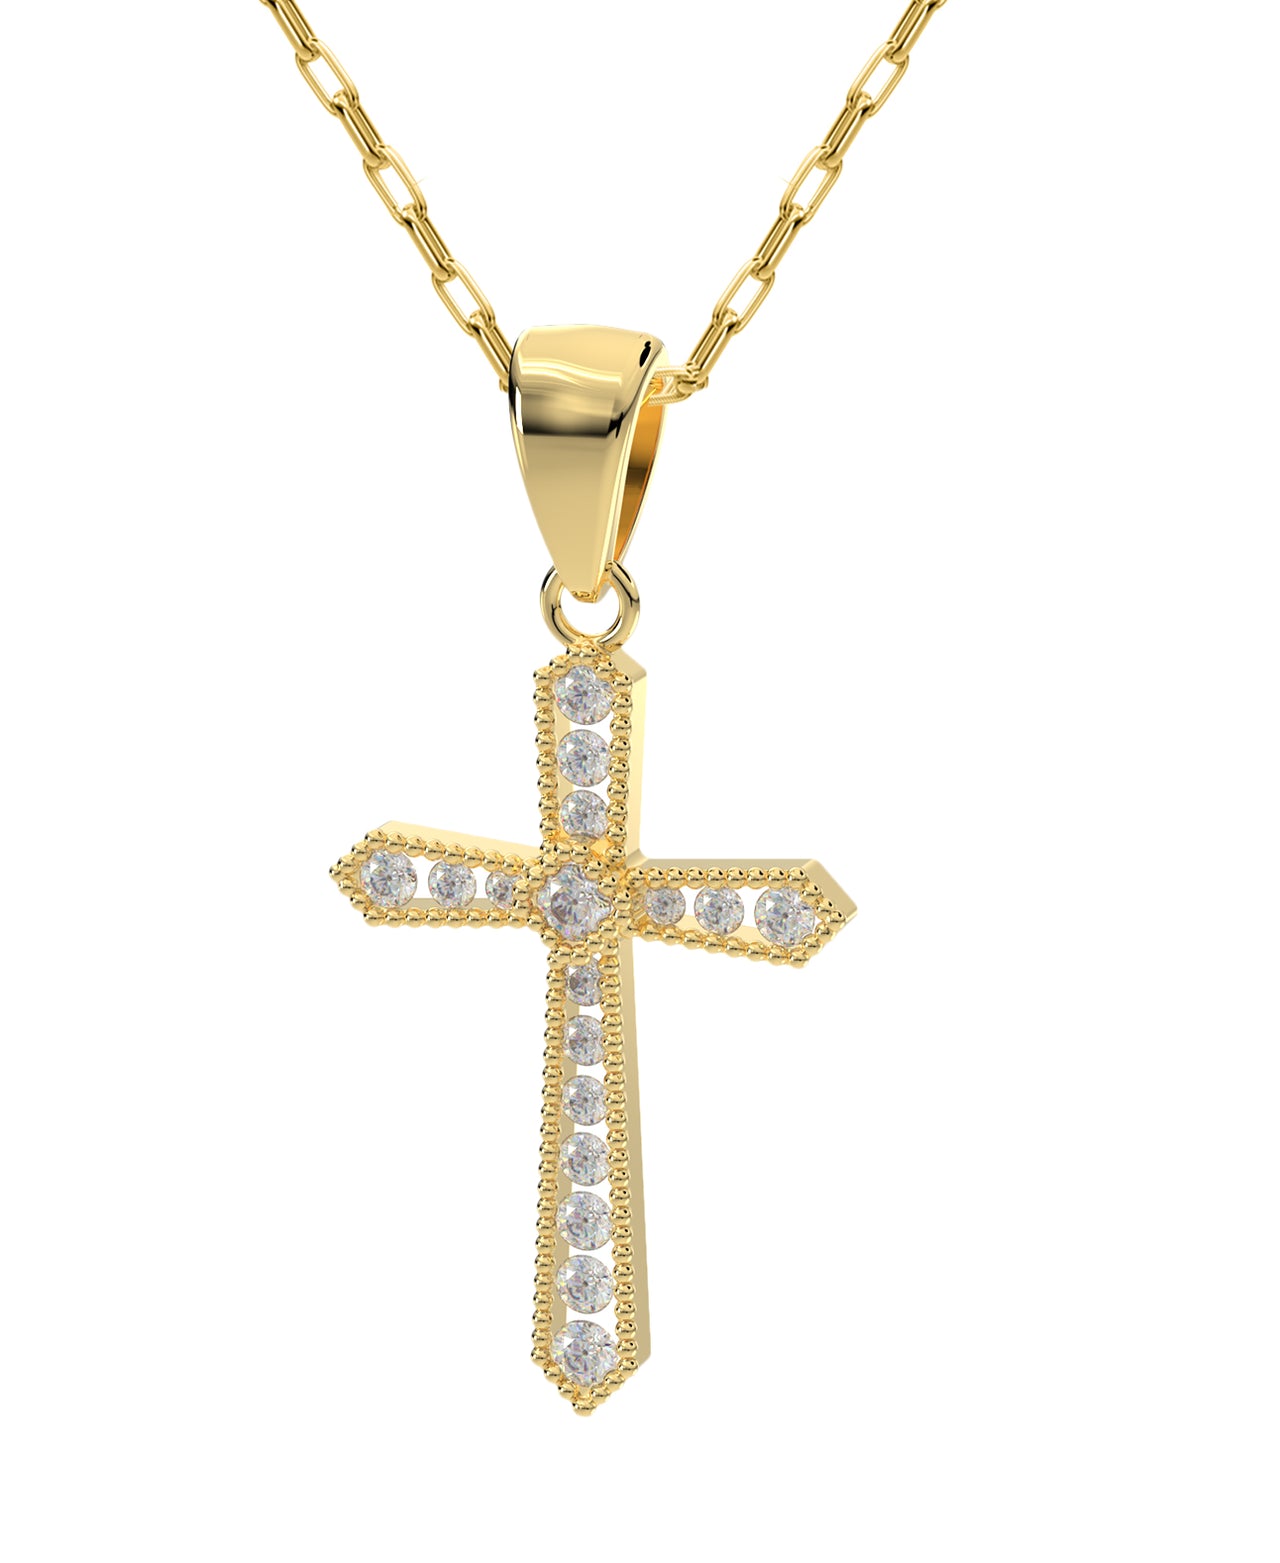 Ladies 14k Yellow Gold Diamond Cross Pendant Necklace, 23mm